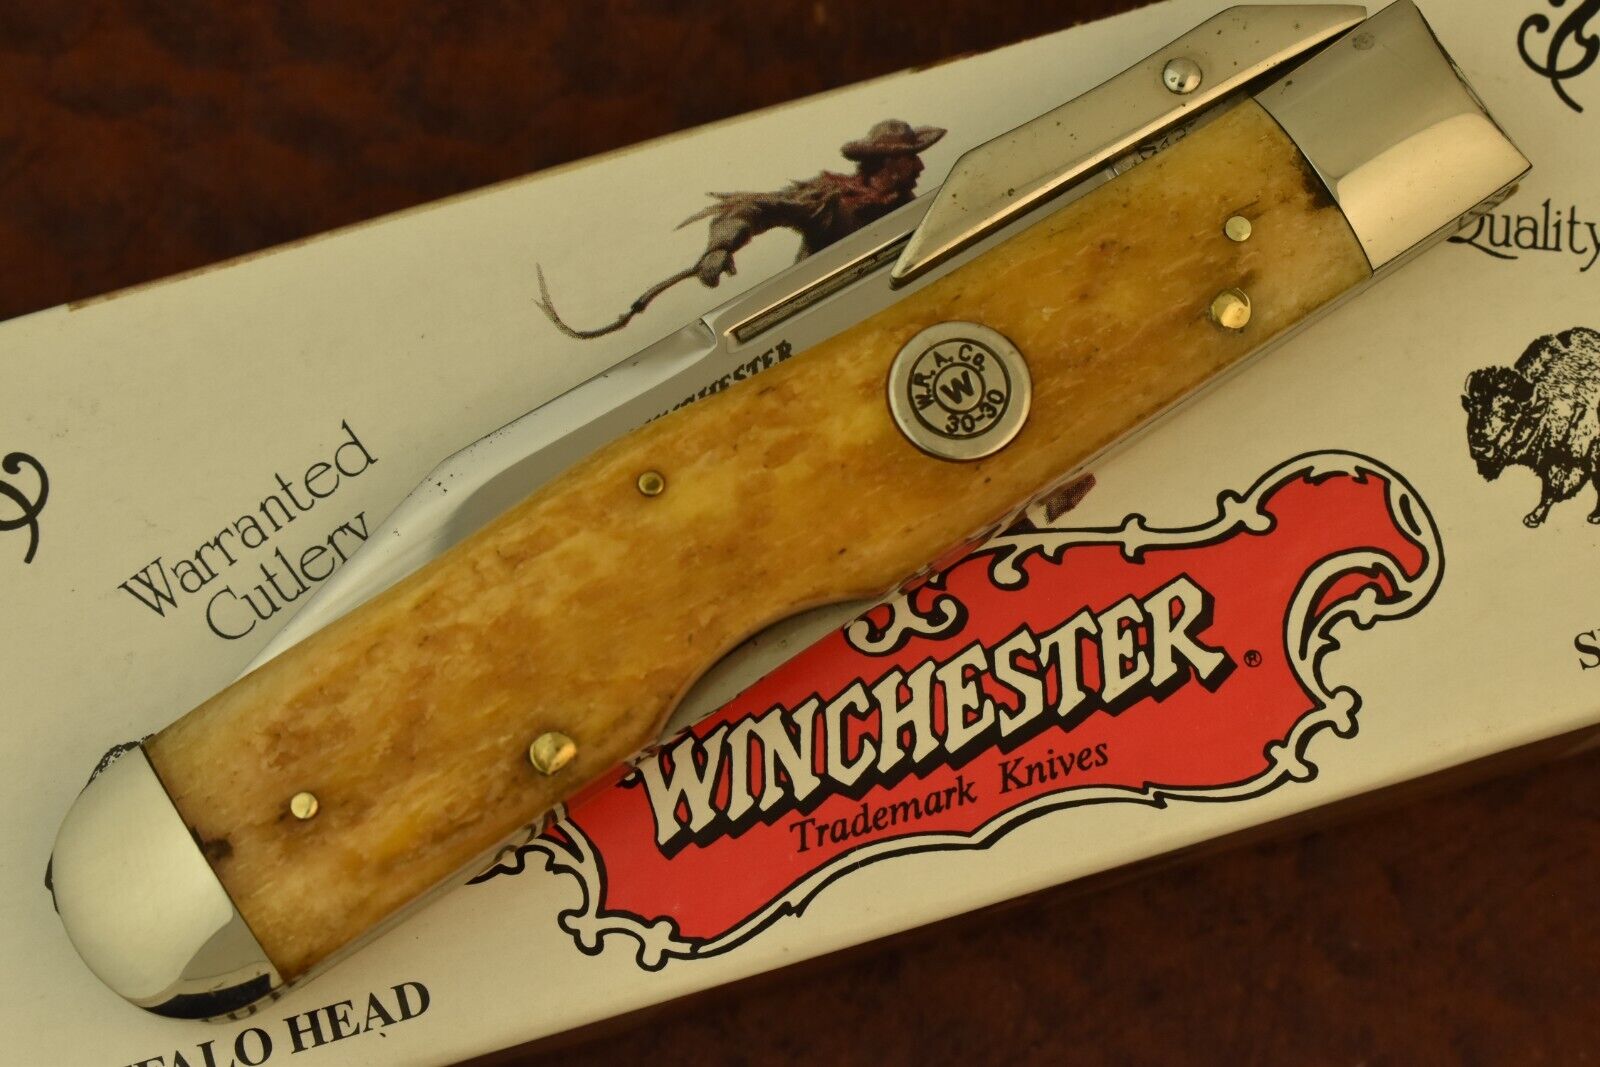 WINCHESTER TRADEMARK MADE IN USA BONE CHEETAH LOCKBACK SWING GUARD KNIFE (16664)